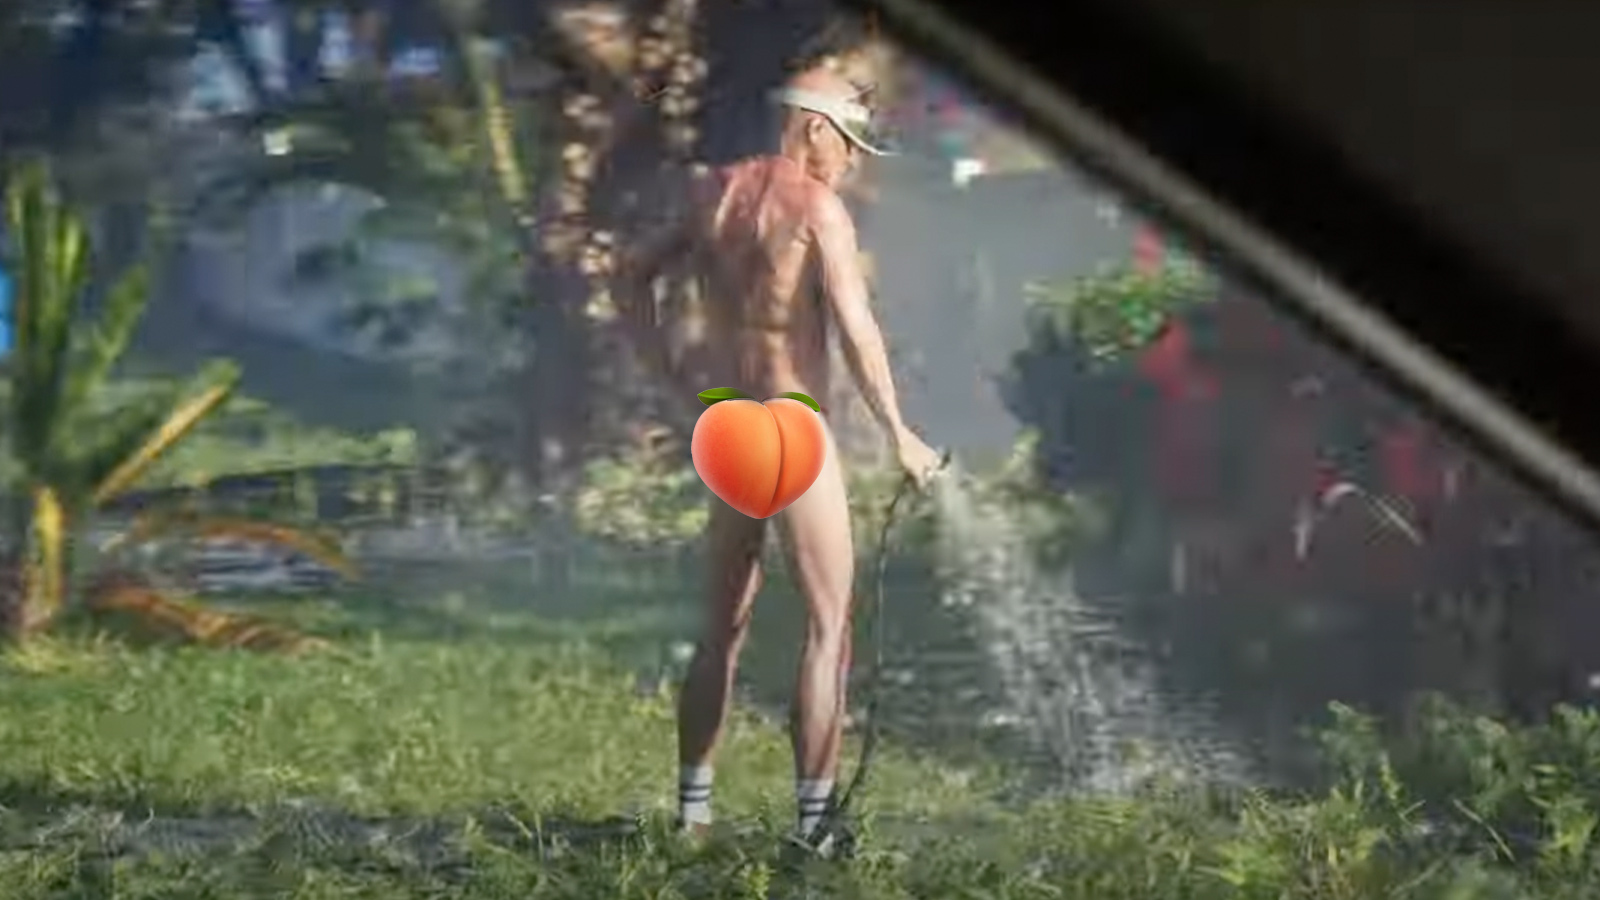 Florida Man watering lawn in GTA VI trailer